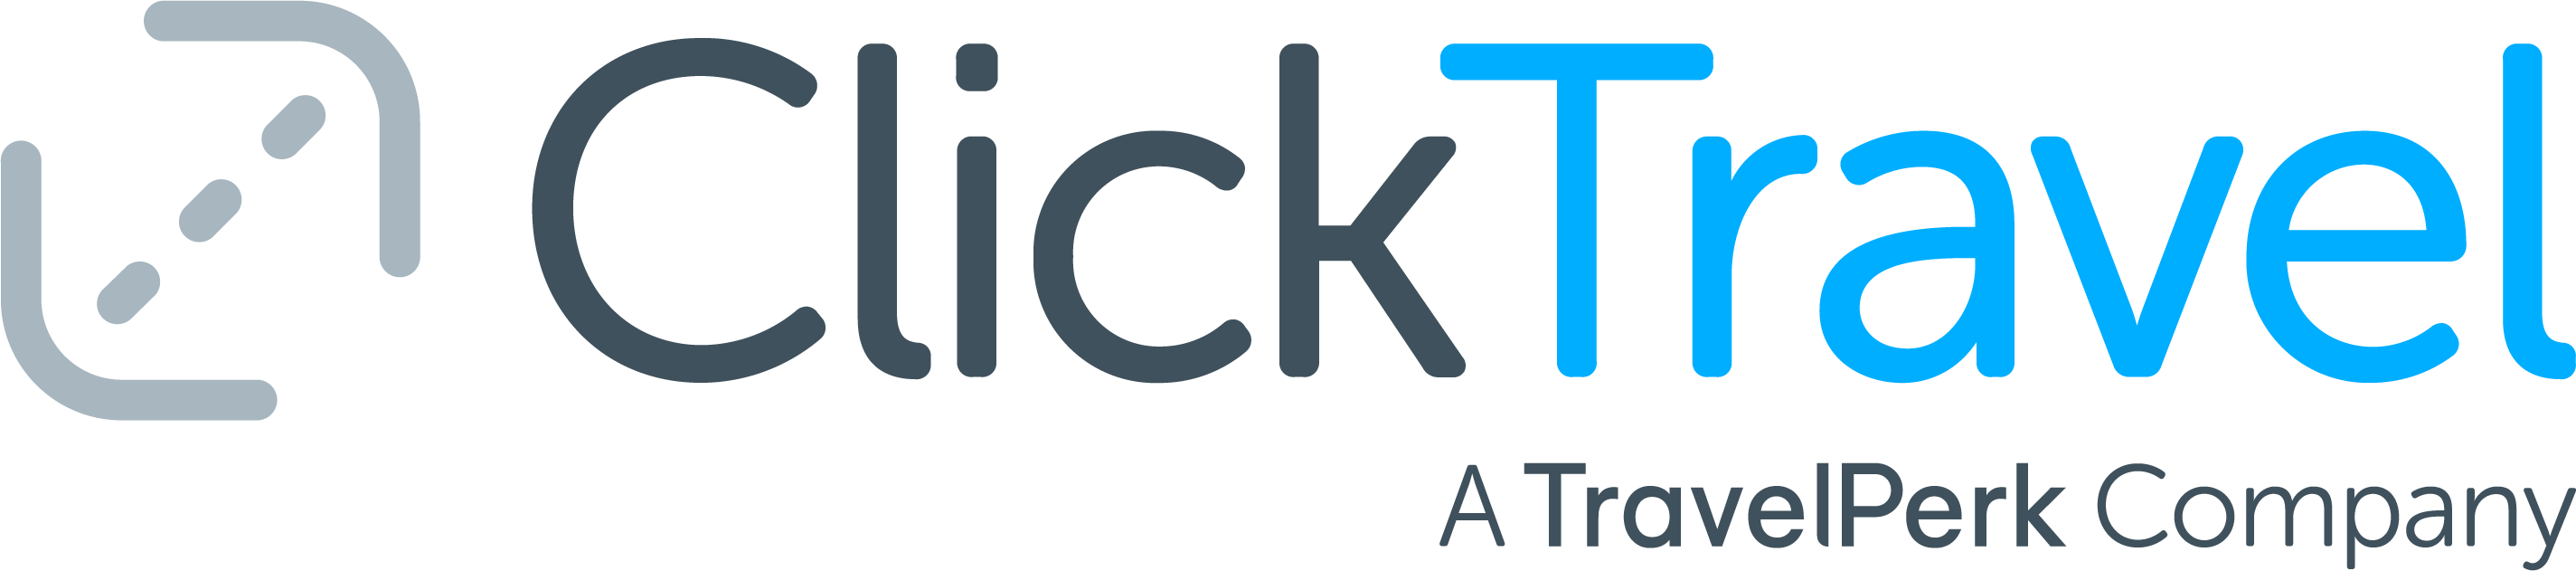 New Click Travel Logo